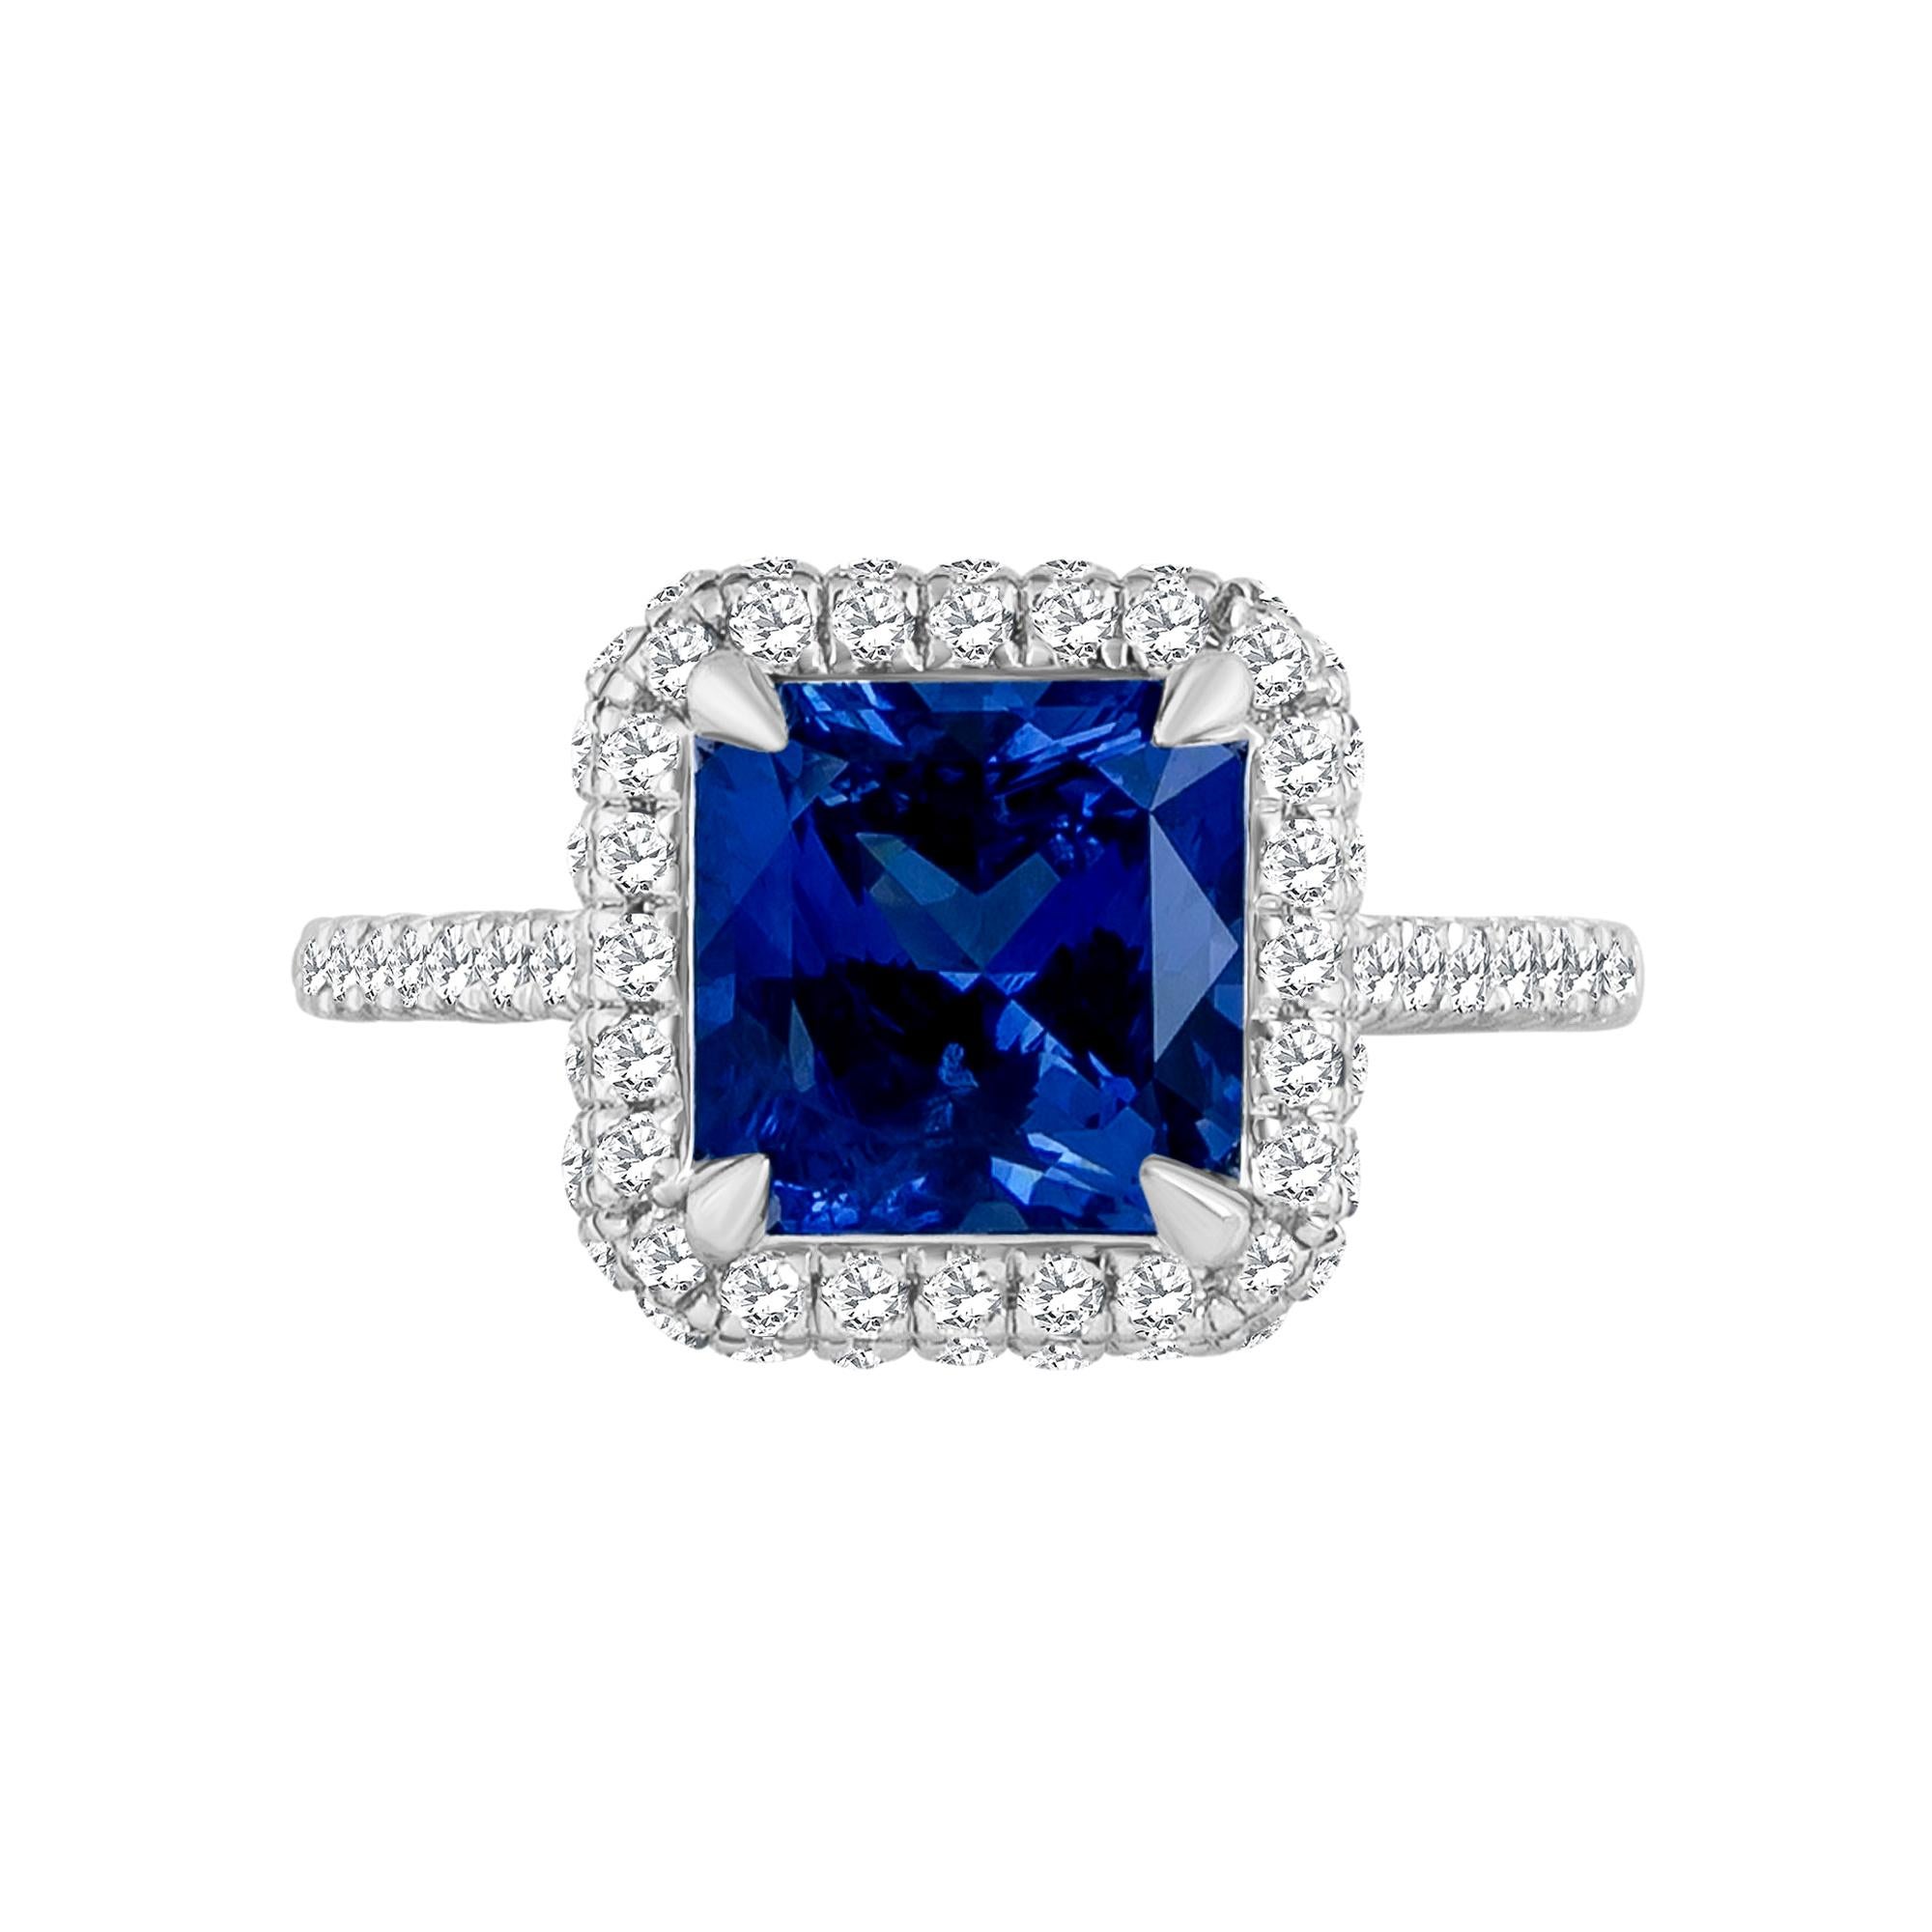 Emilio Jewelry Certified 3.98 Carat Ceylon Sapphire Diamond Ring